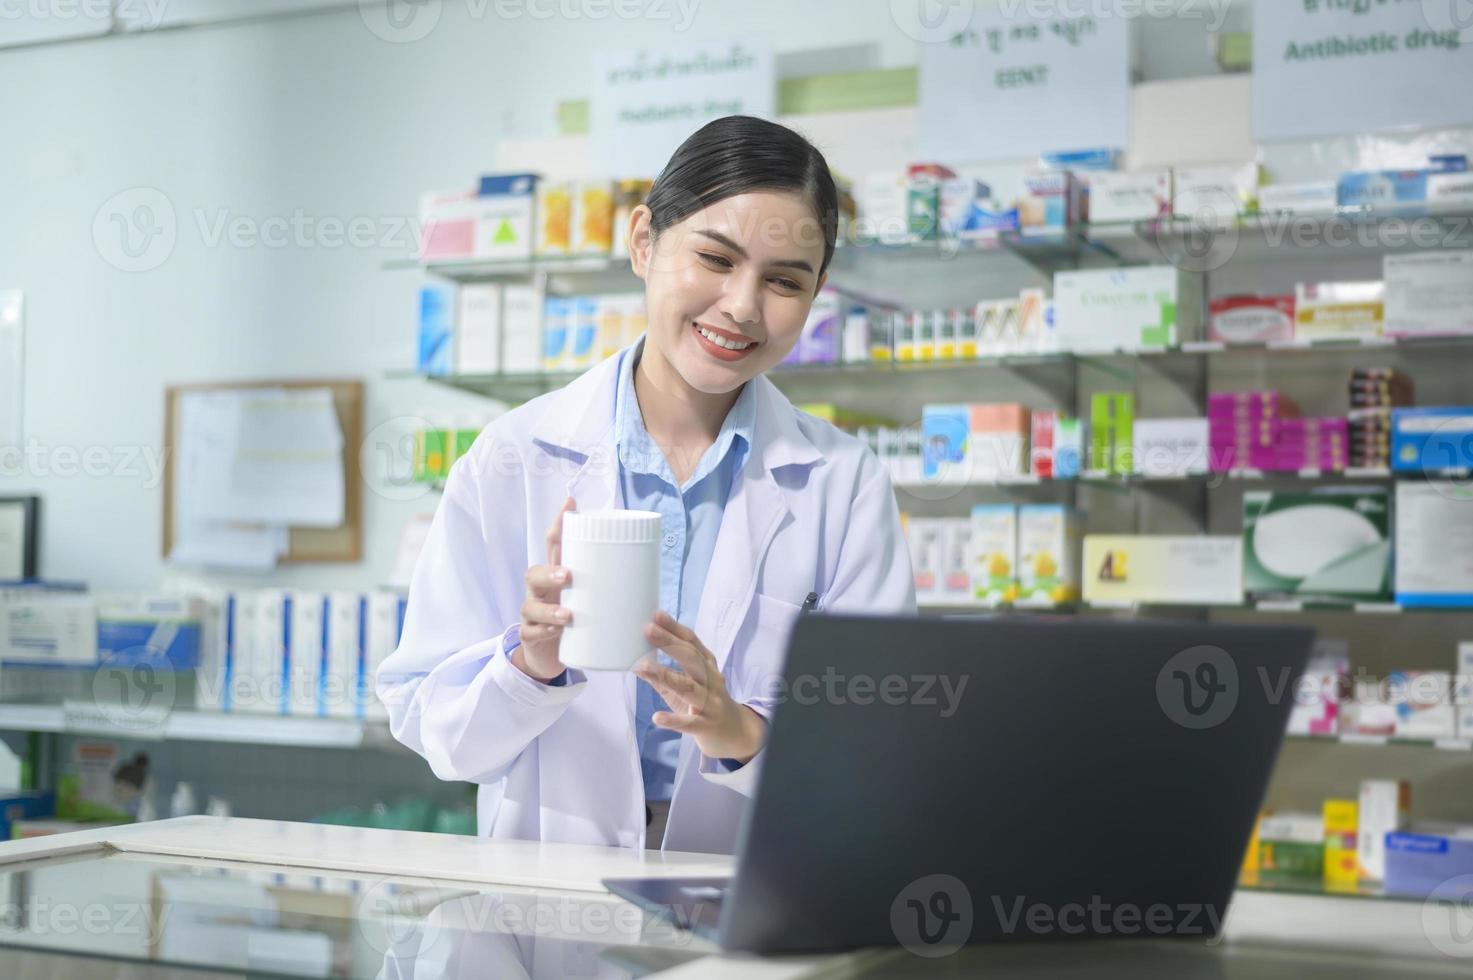 una farmacéutica que asesora a una clienta a través de una videollamada en una farmacia moderna. foto